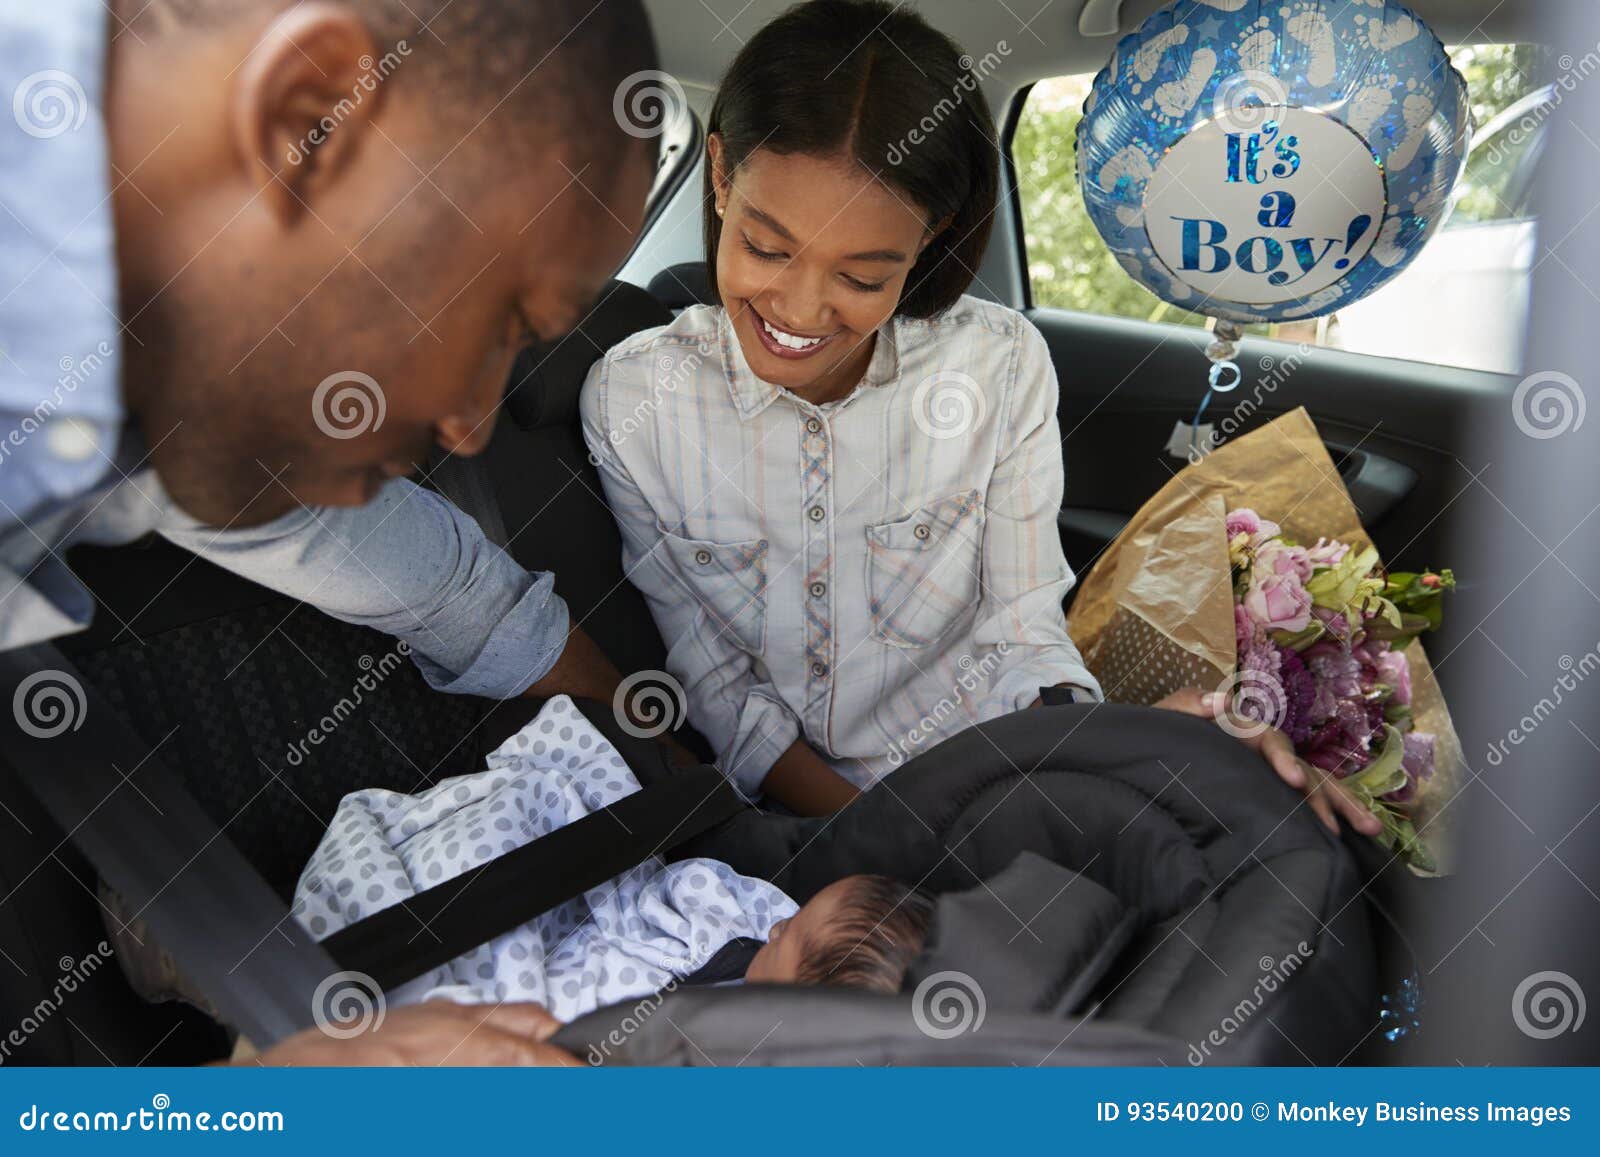 parents bringing newborn baby home in car